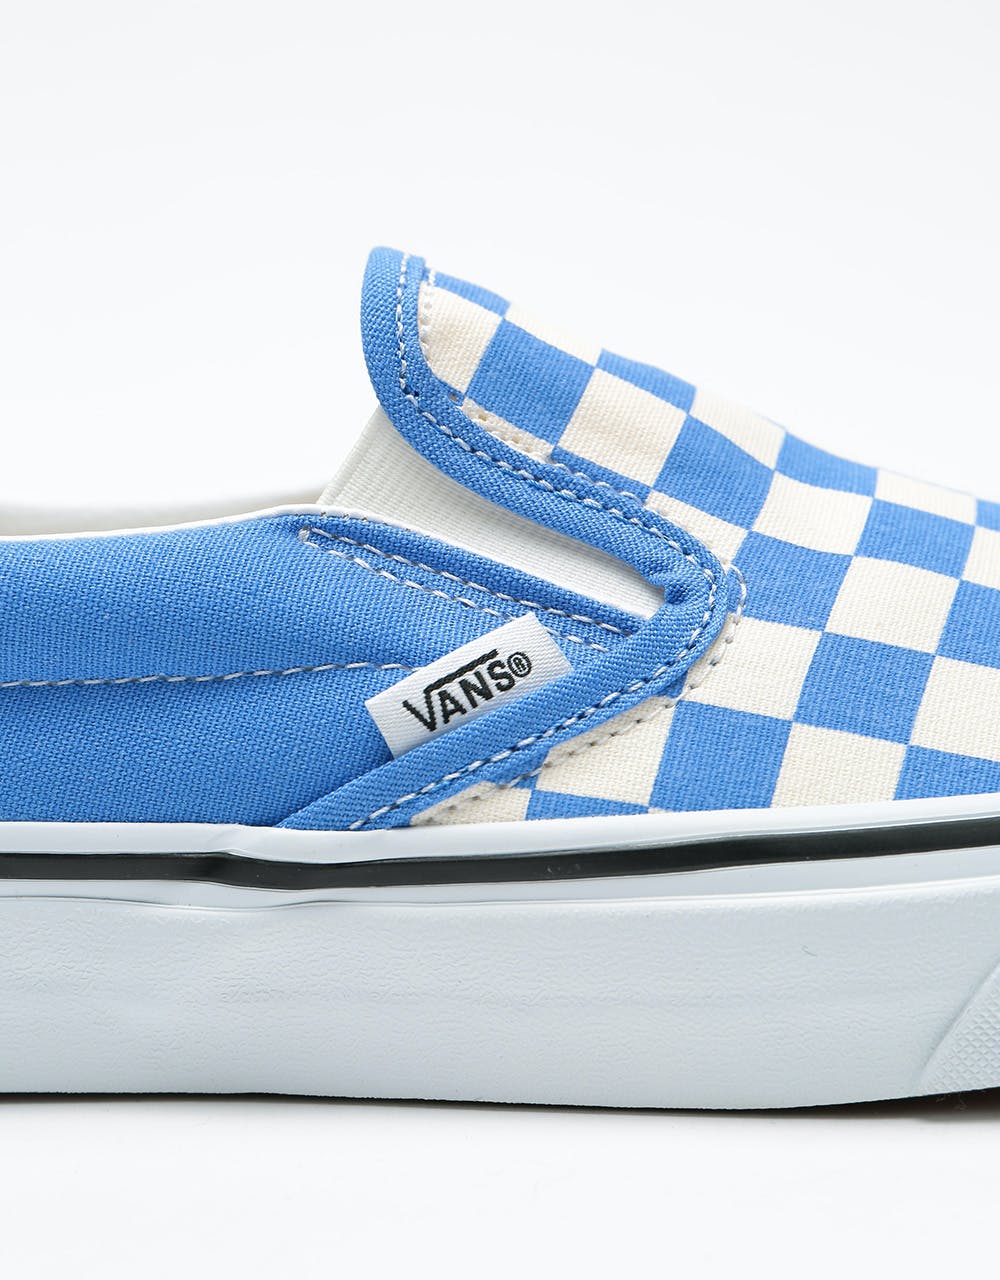 Vans Classic Slip-On Skate Shoes - (Checkerboard) Ultramarine/True White